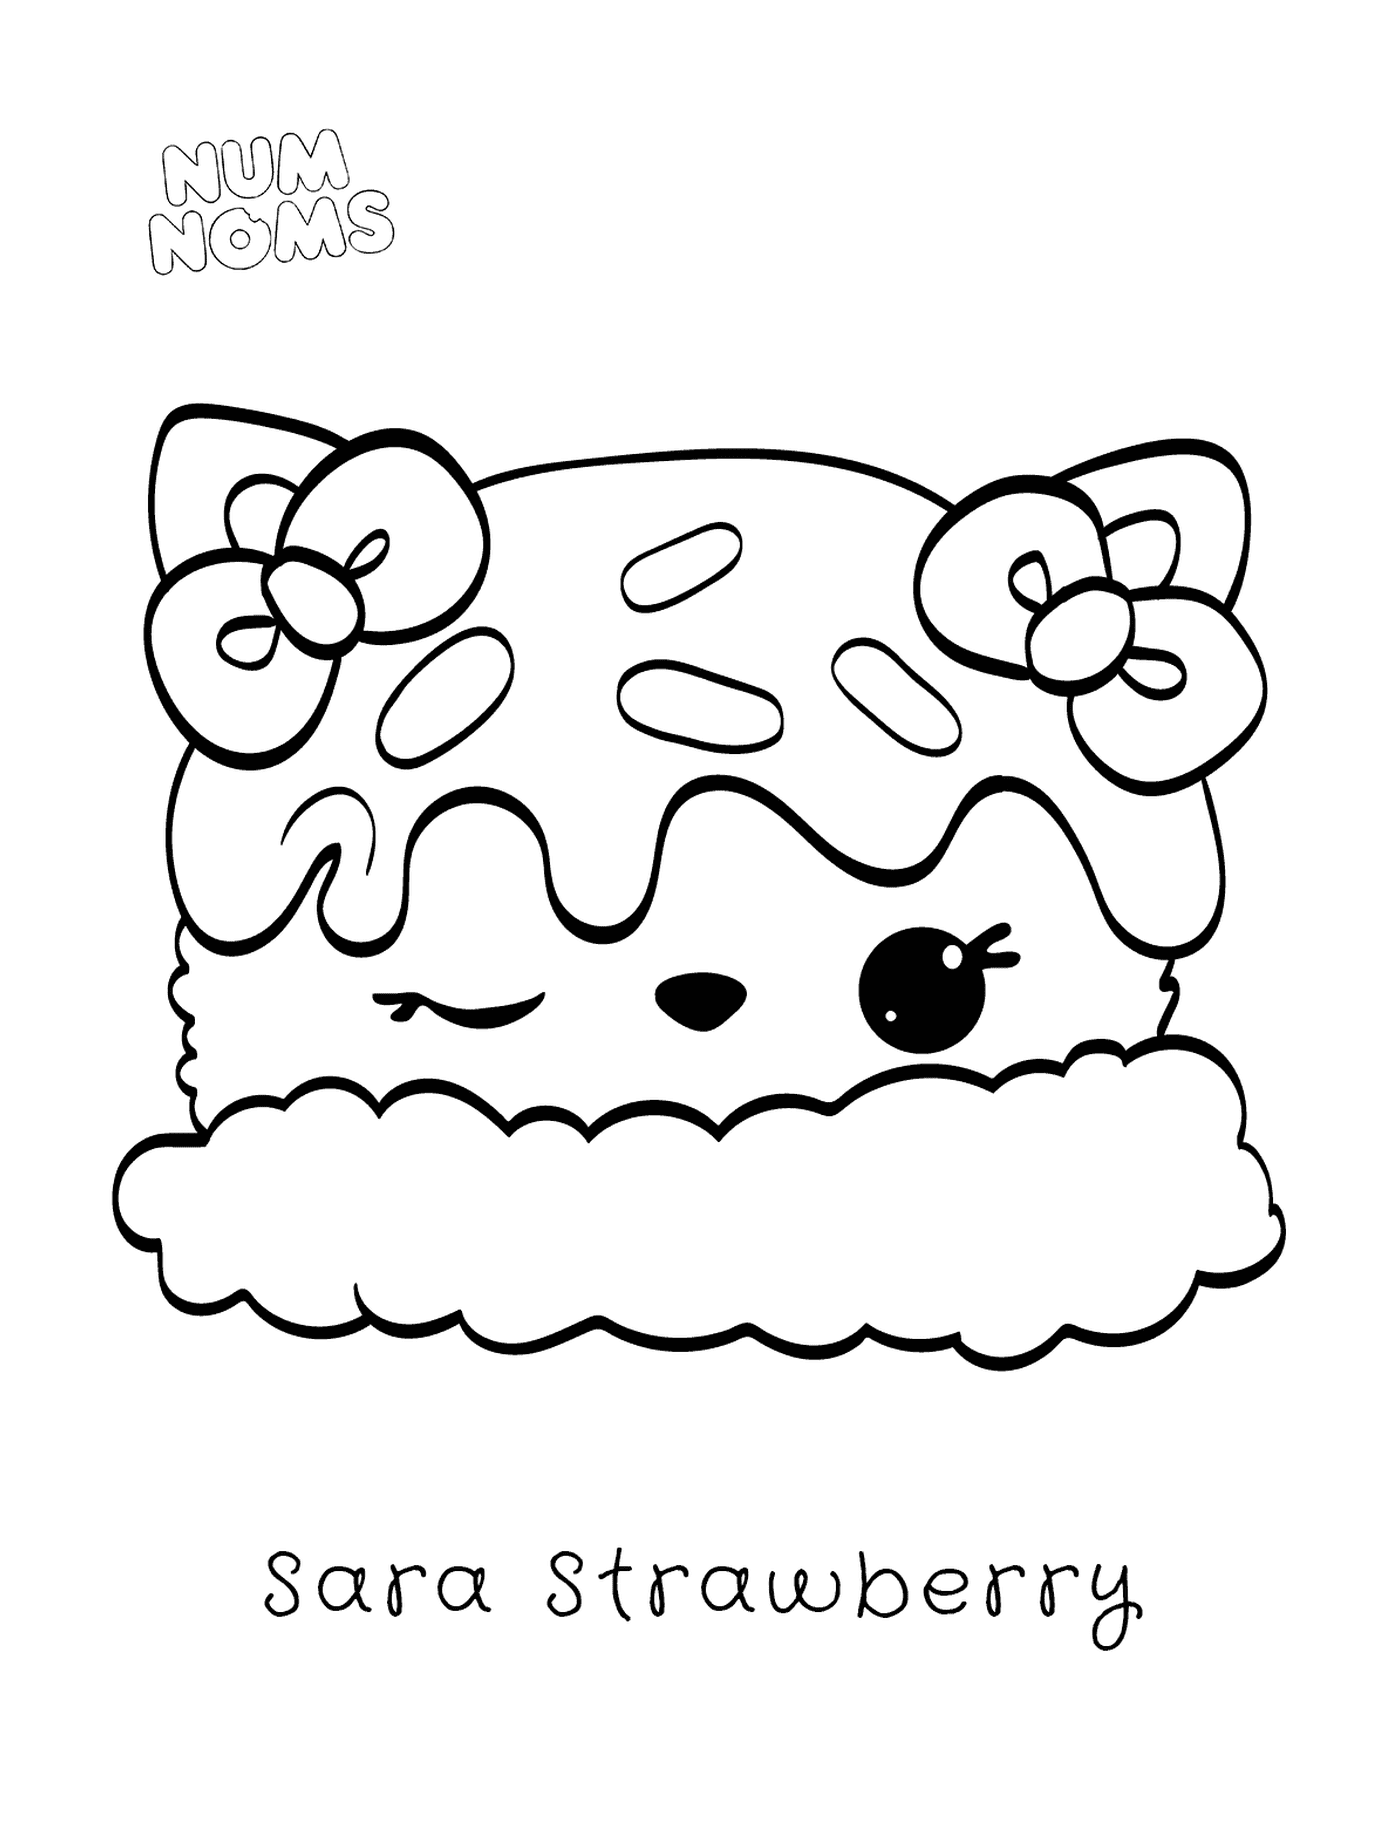  Fresa Sara, una delicia 